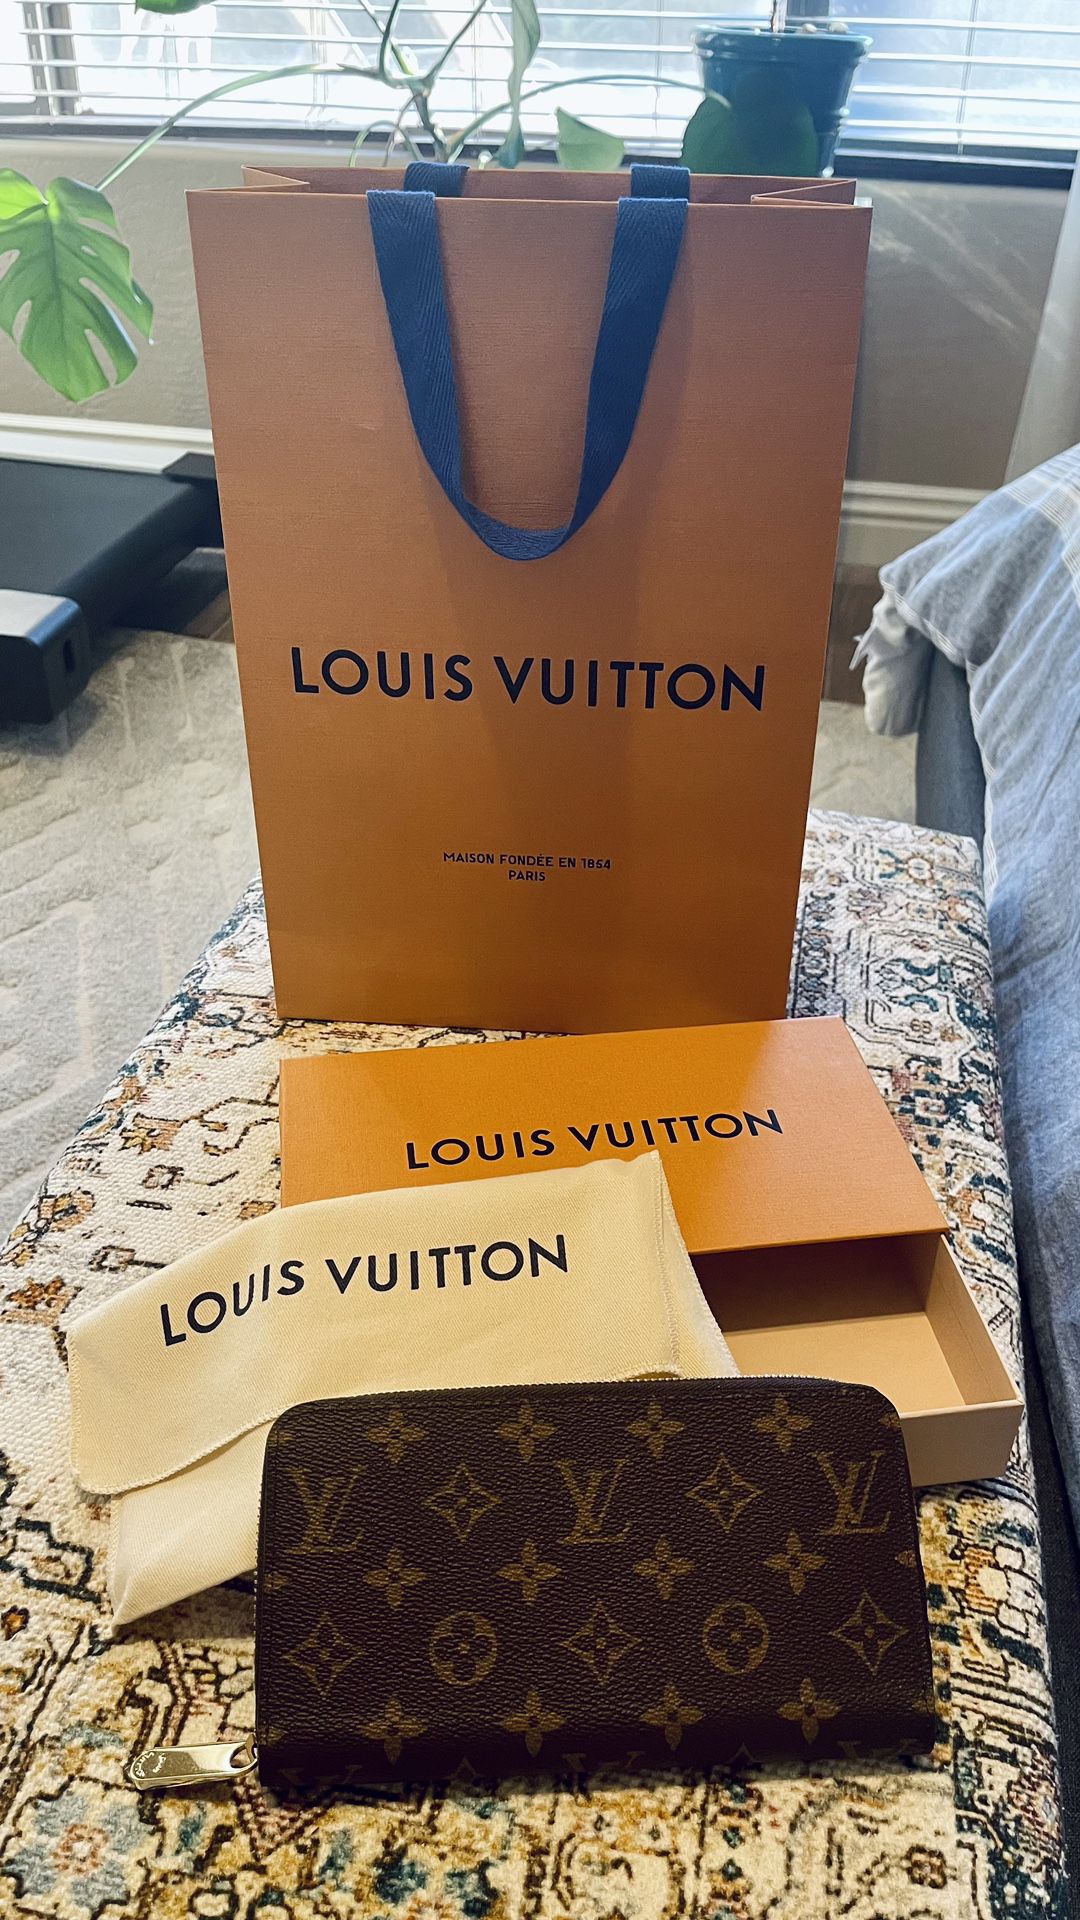 Louis Vuitton Love Locks Zippy Wallet for Sale in Dupont, WA - OfferUp